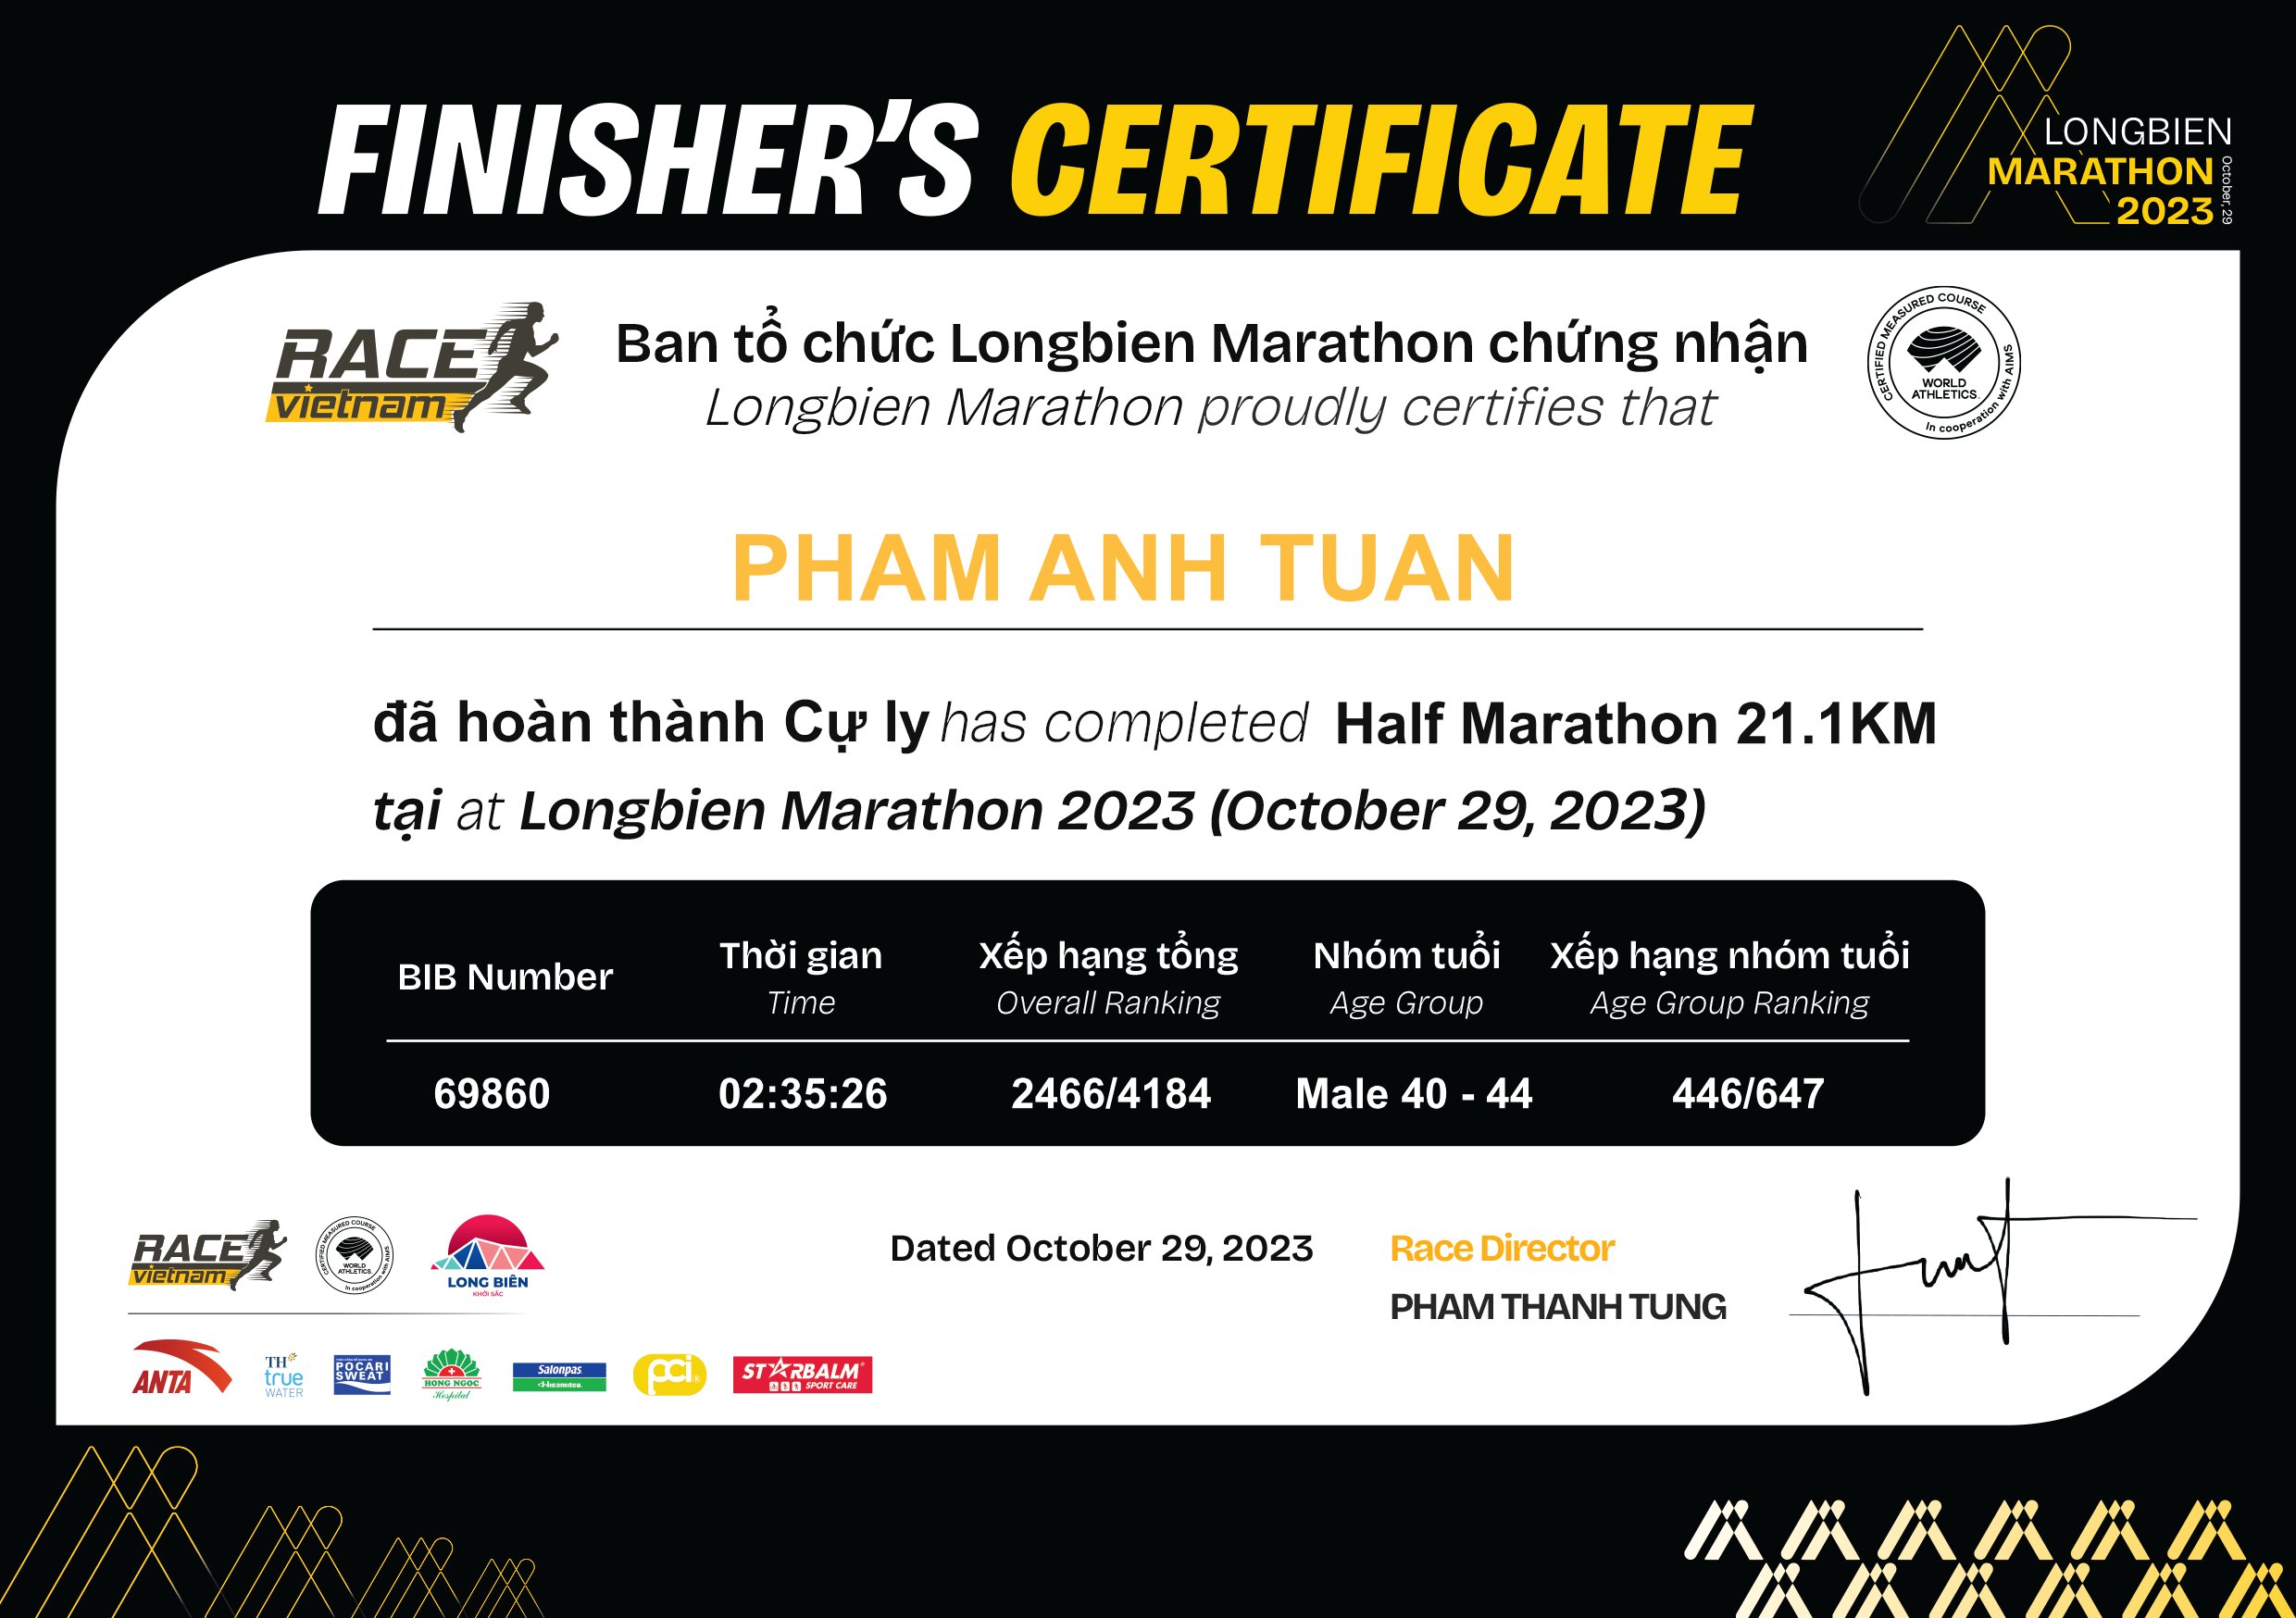 69860 - Pham Anh Tuan